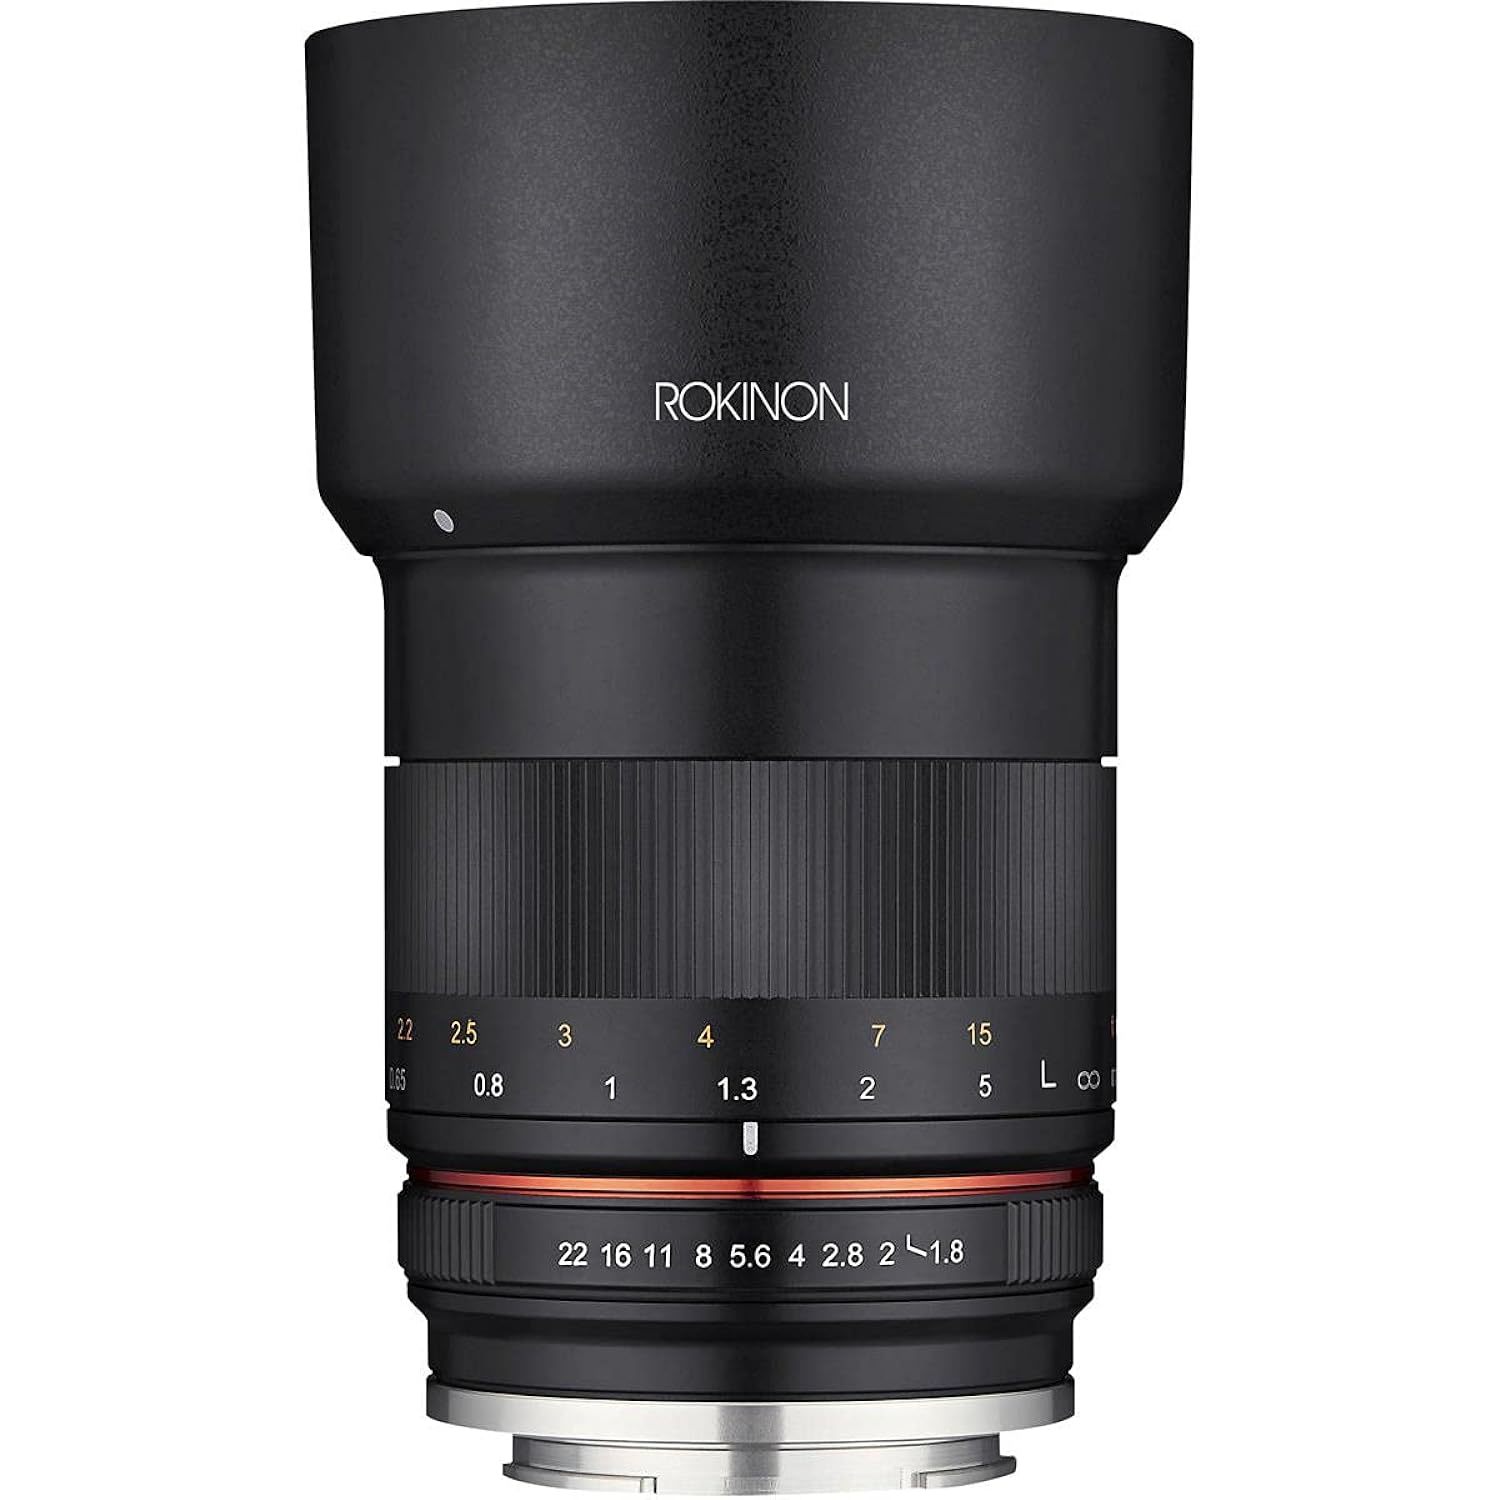 Rokinon 85mm f/1.8 Manual Focus Lens for Sony E Mount Nex Series Cameras - Black - $628.99